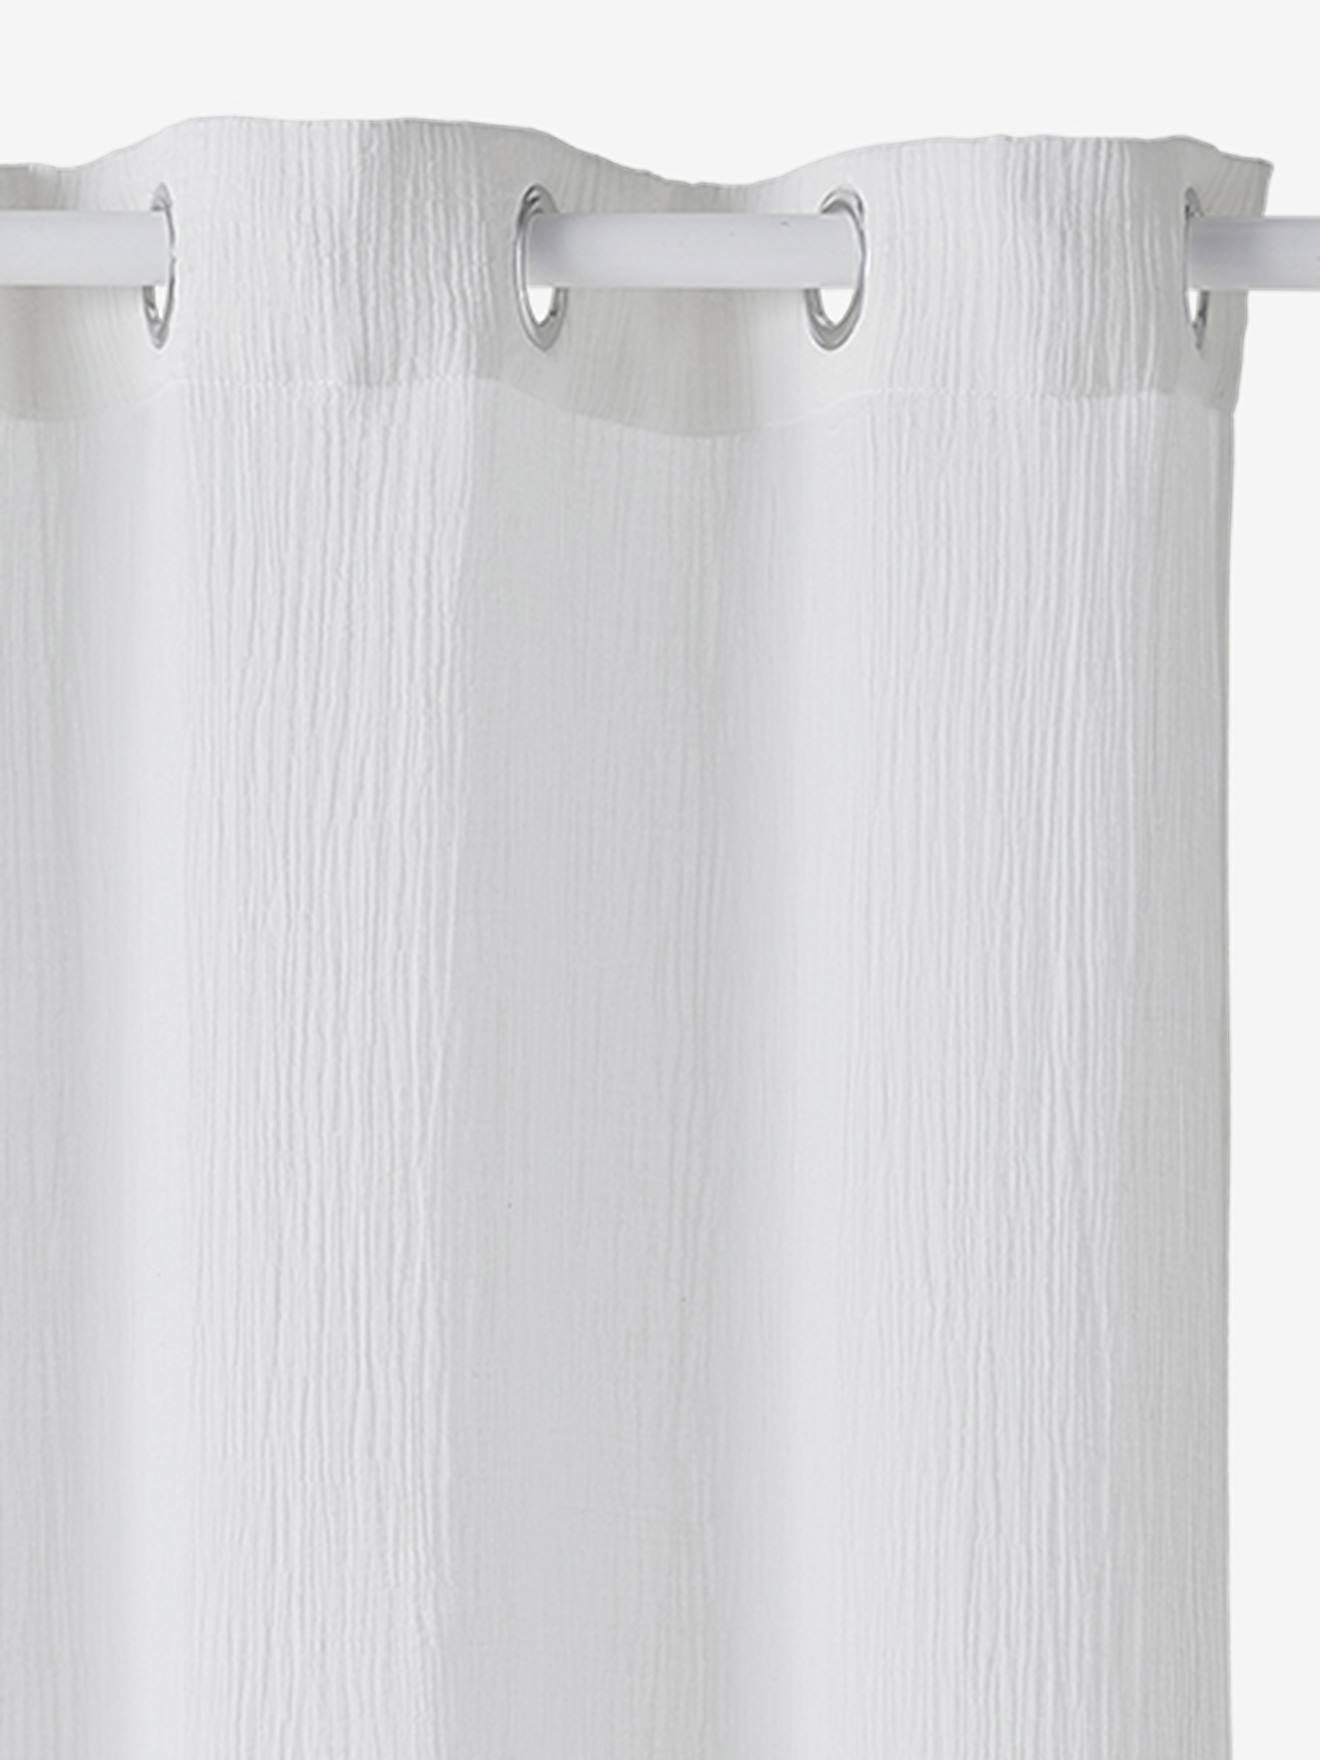 Sheer Curtain In Cotton Gauze White, Gauze Shower Curtain